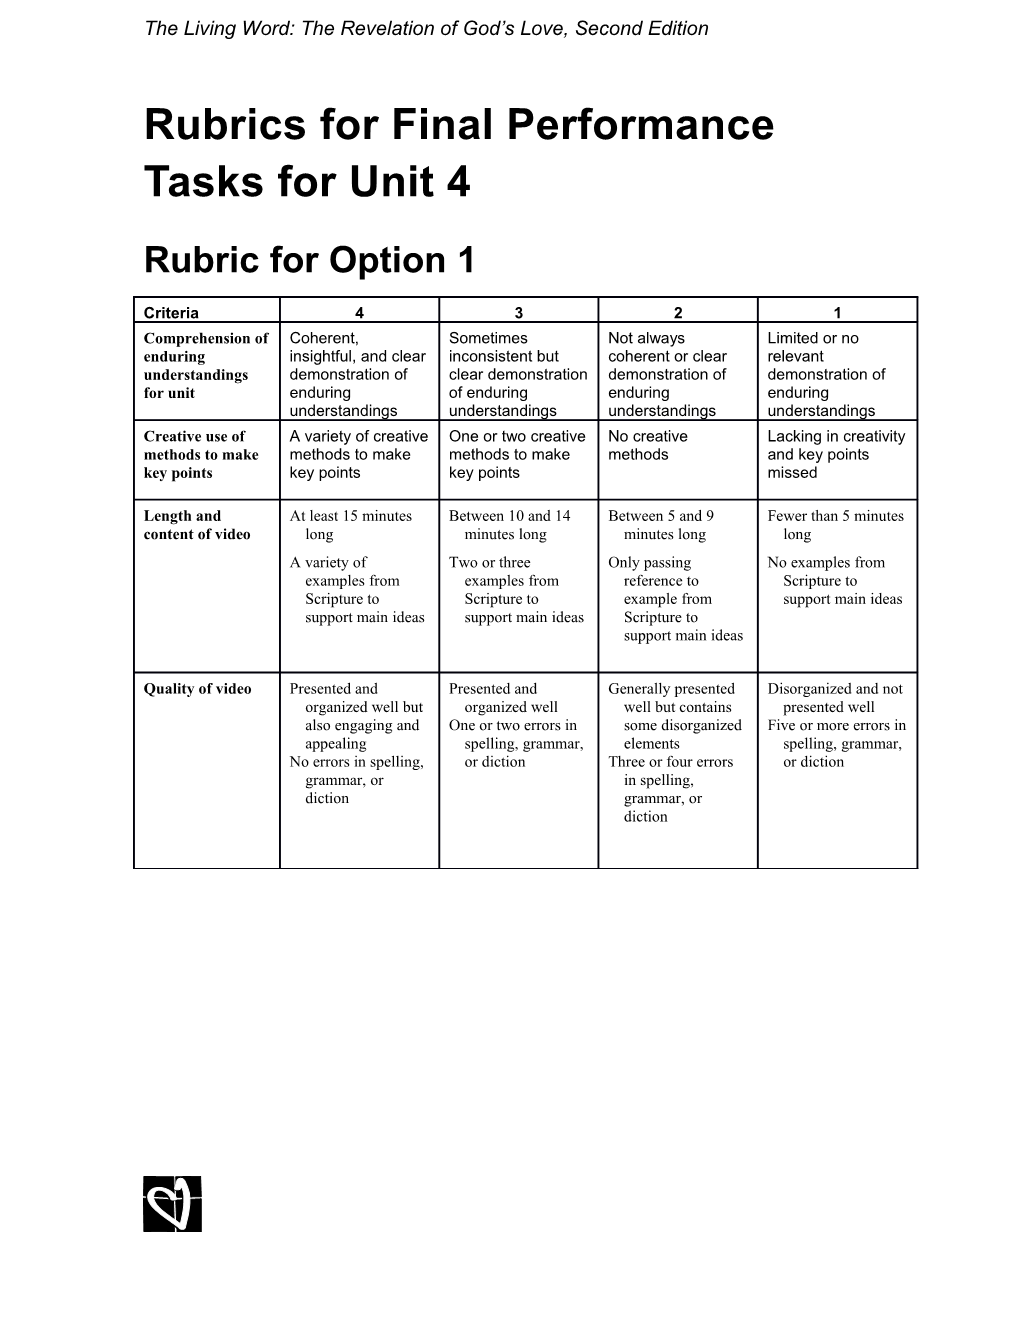 Rubrics for Final Performance Tasks for Unit 4